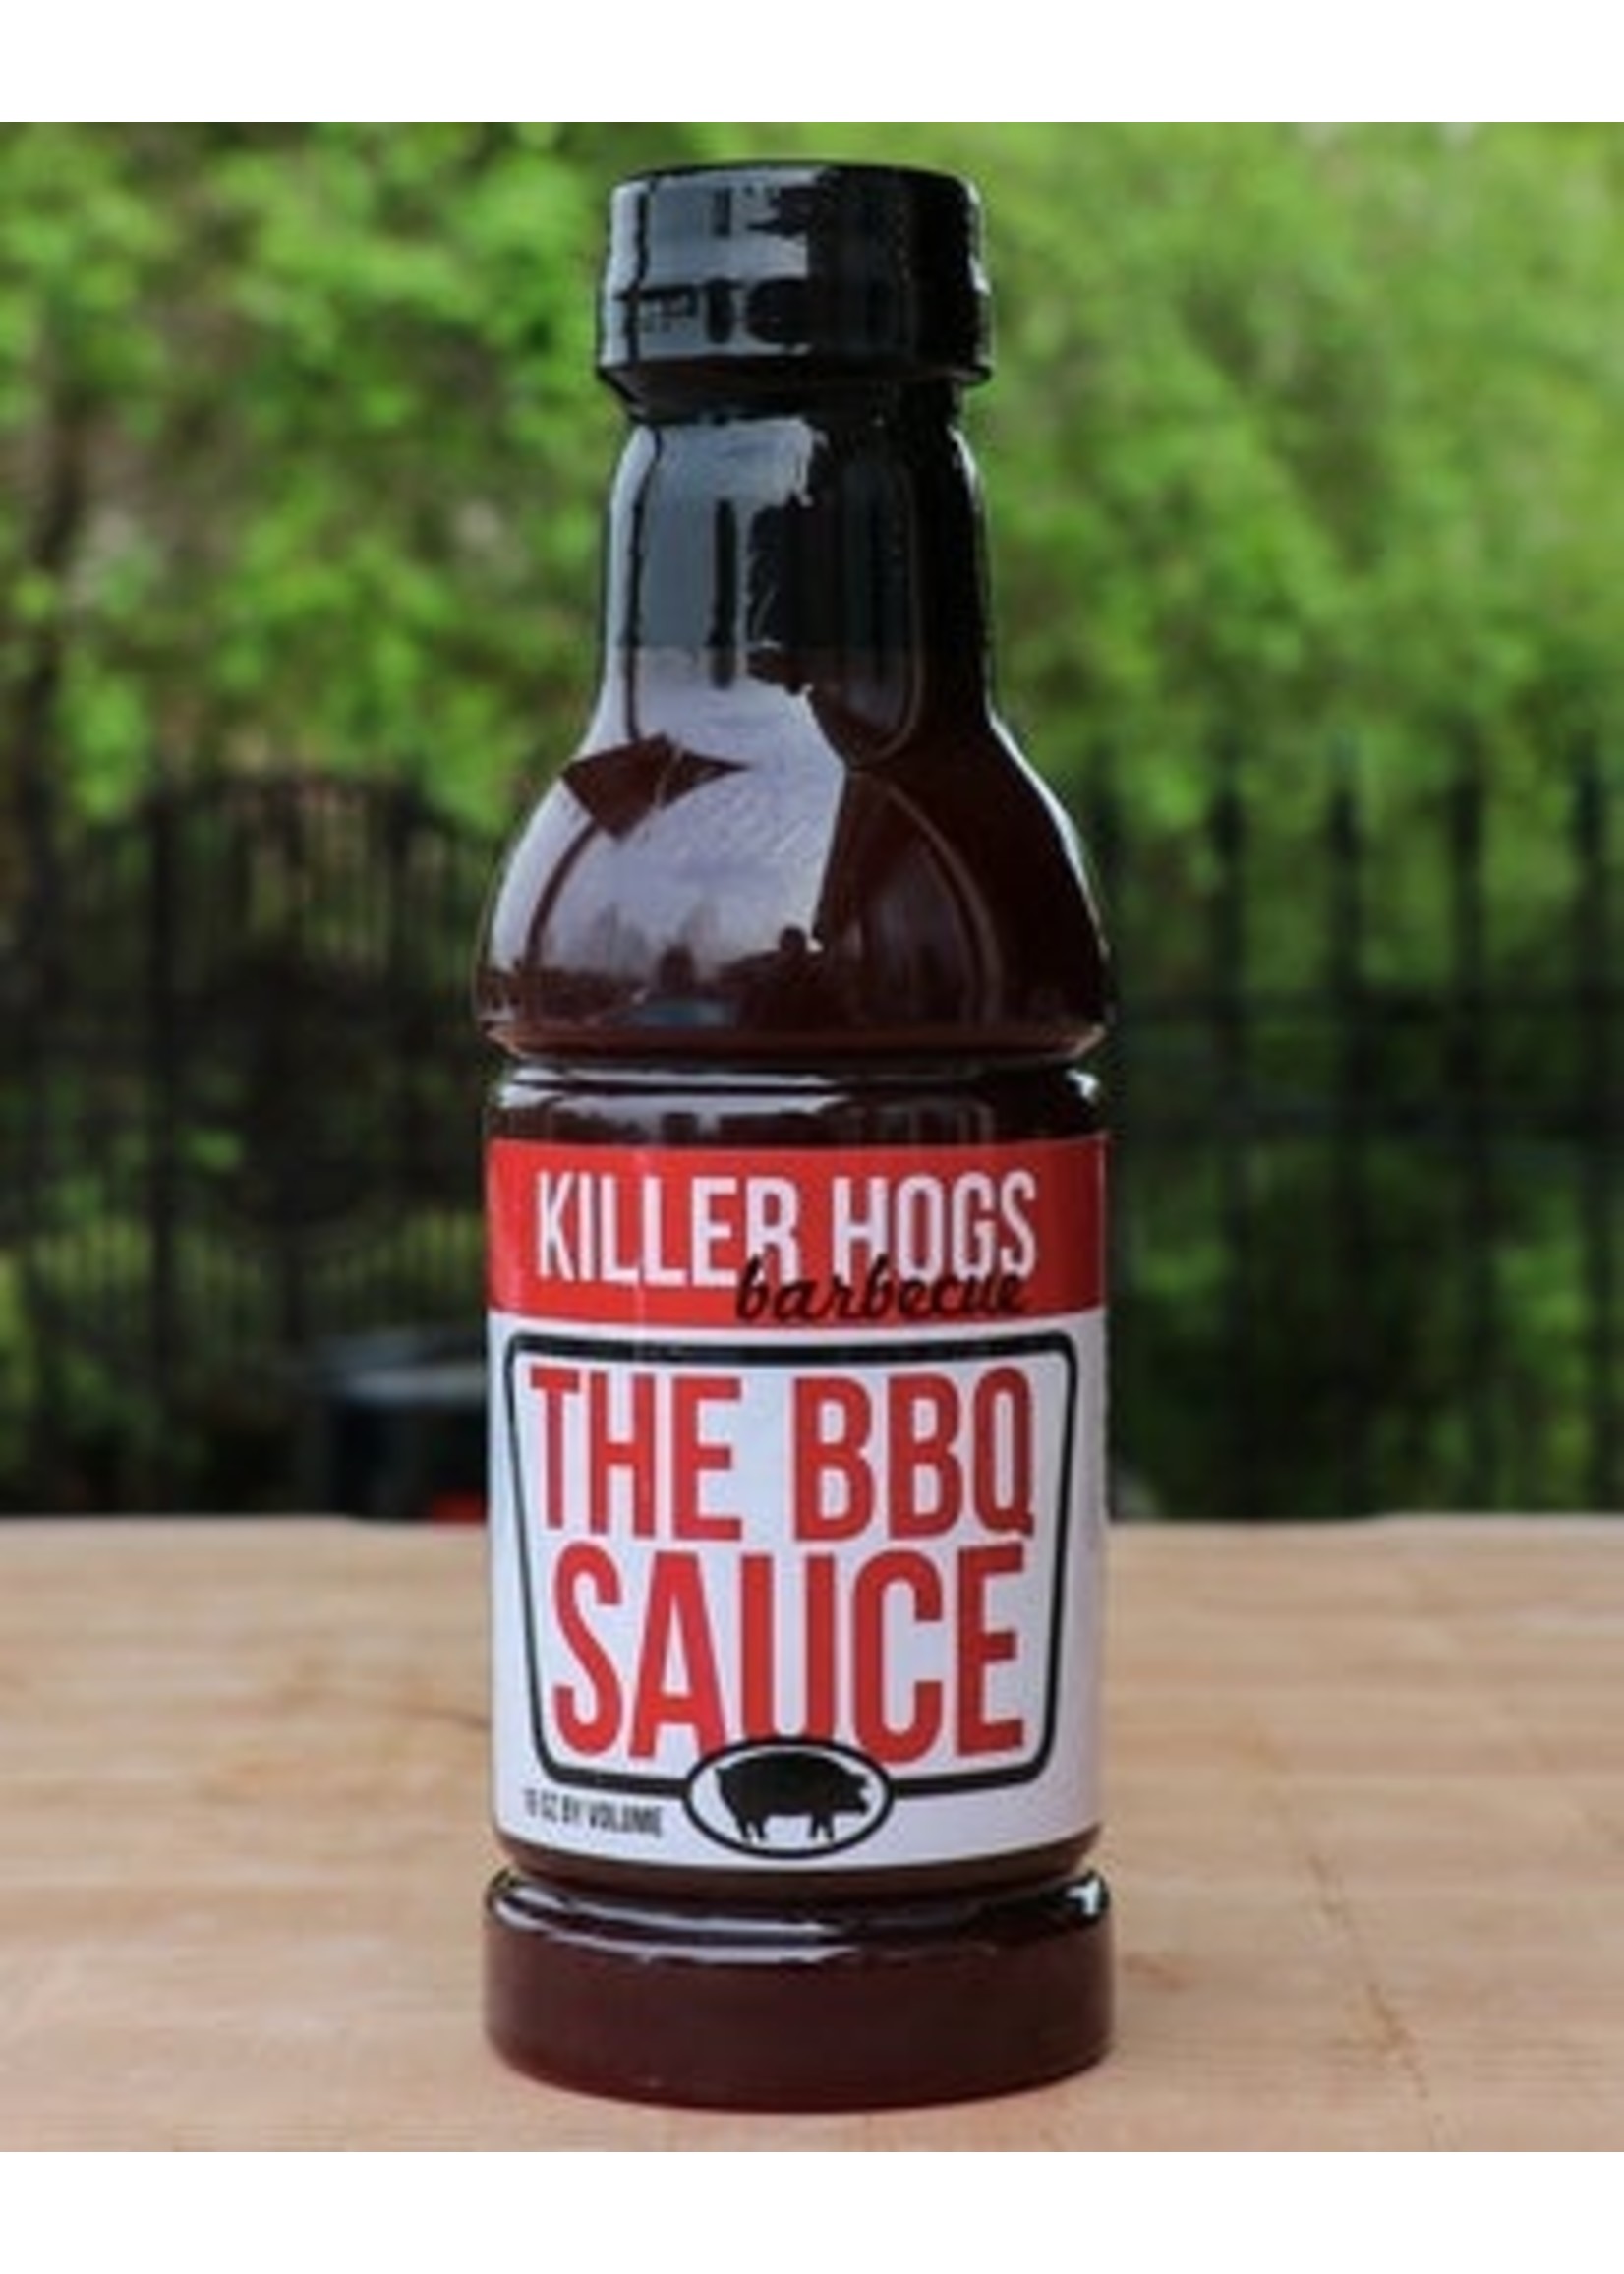 Killer Hogs Barbecue Killer Hogs The BBQ Sauce